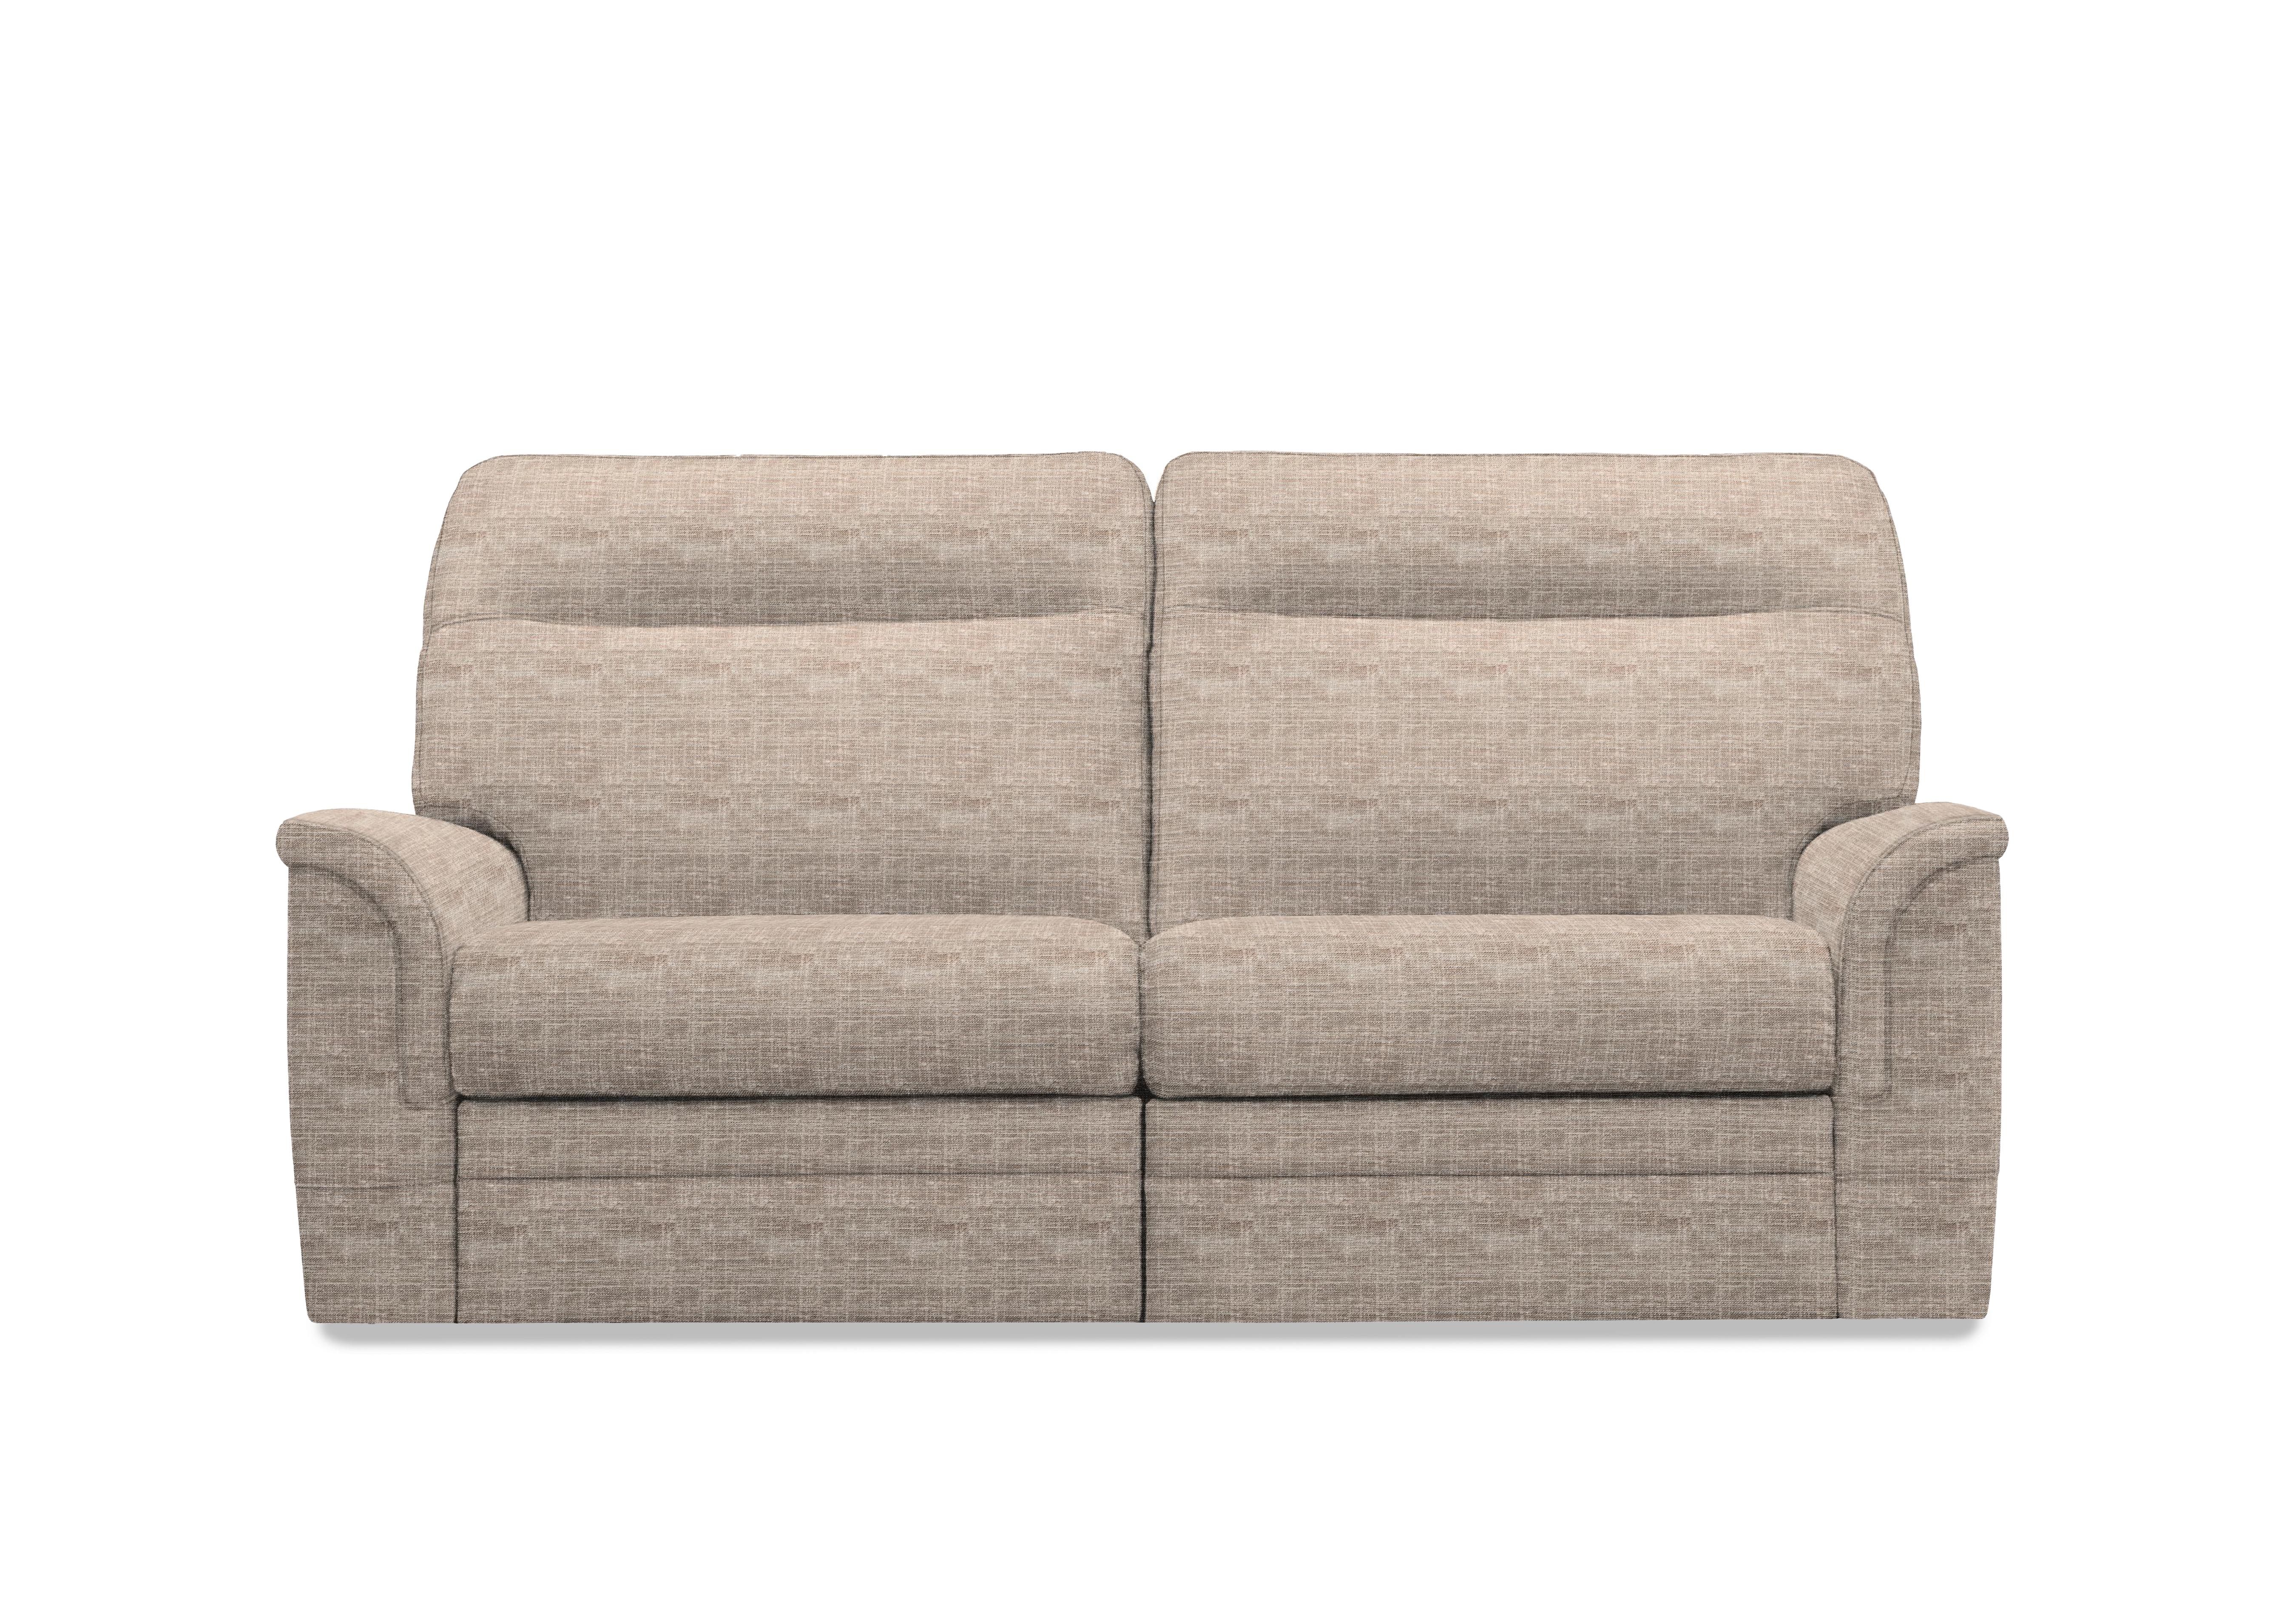 Hudson 23 Large 2 Seater Fabric Sofa in Dash Oatmeal 001497-0051 on Furniture Village